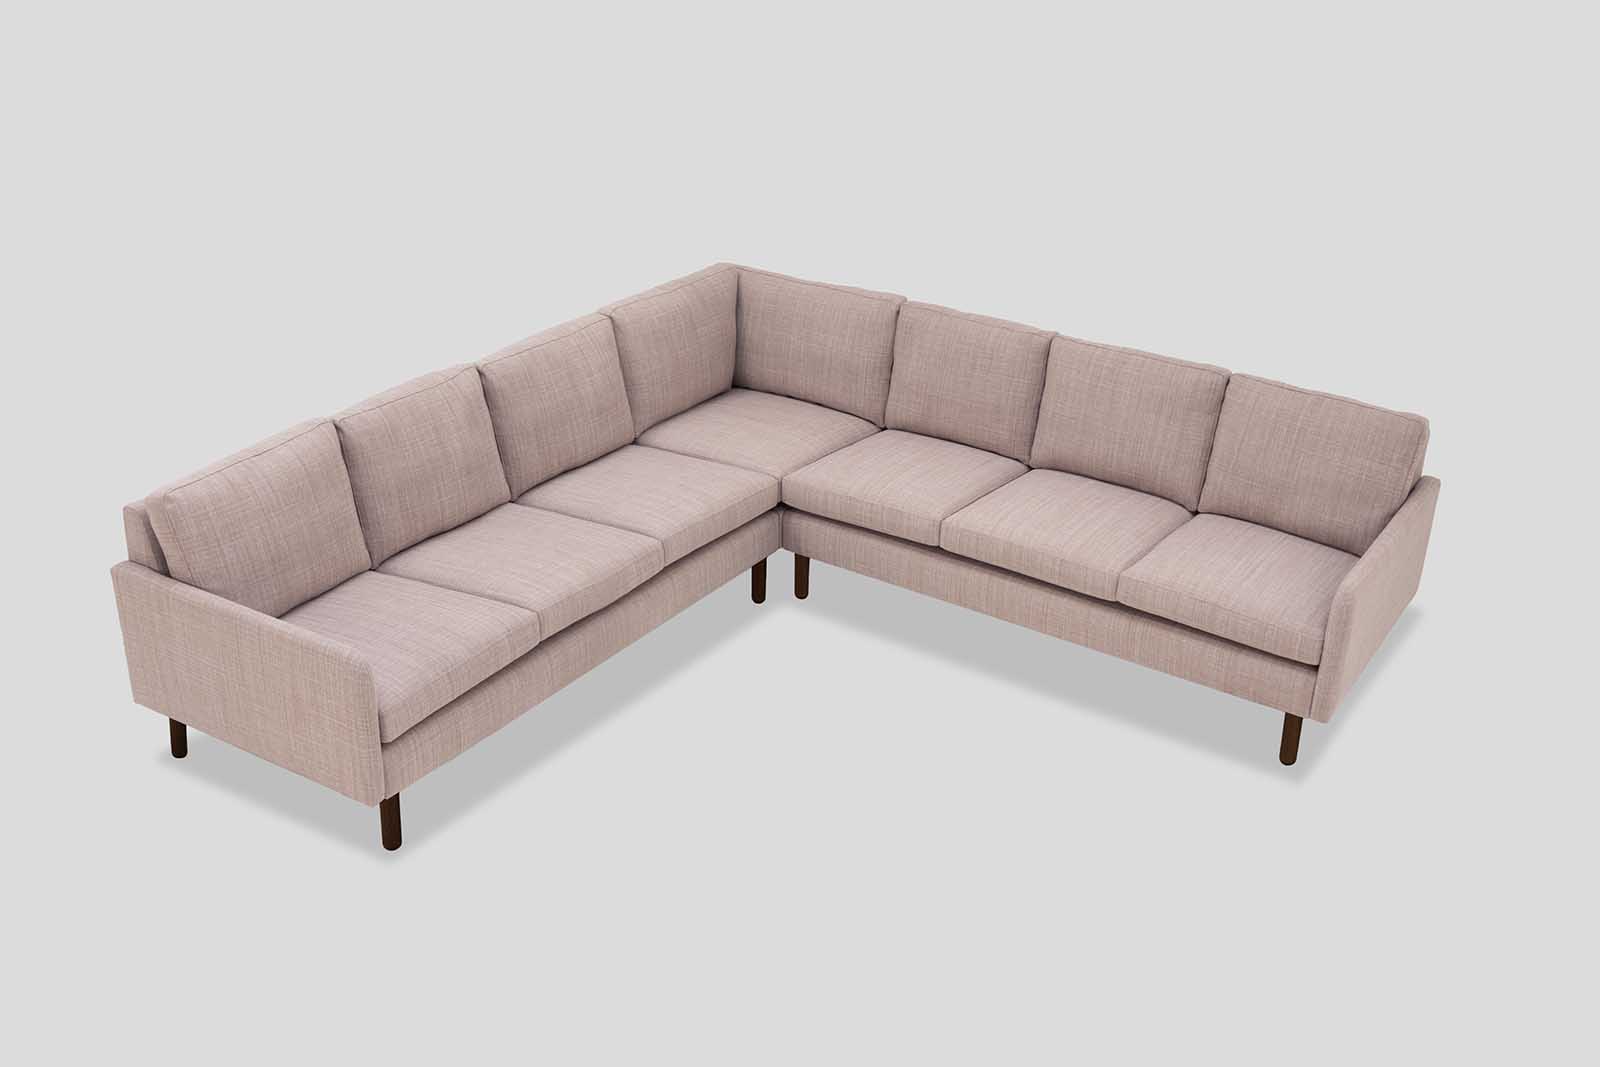 HB03-large-corner-sofa-rosewater-3x3-overhead-treacle